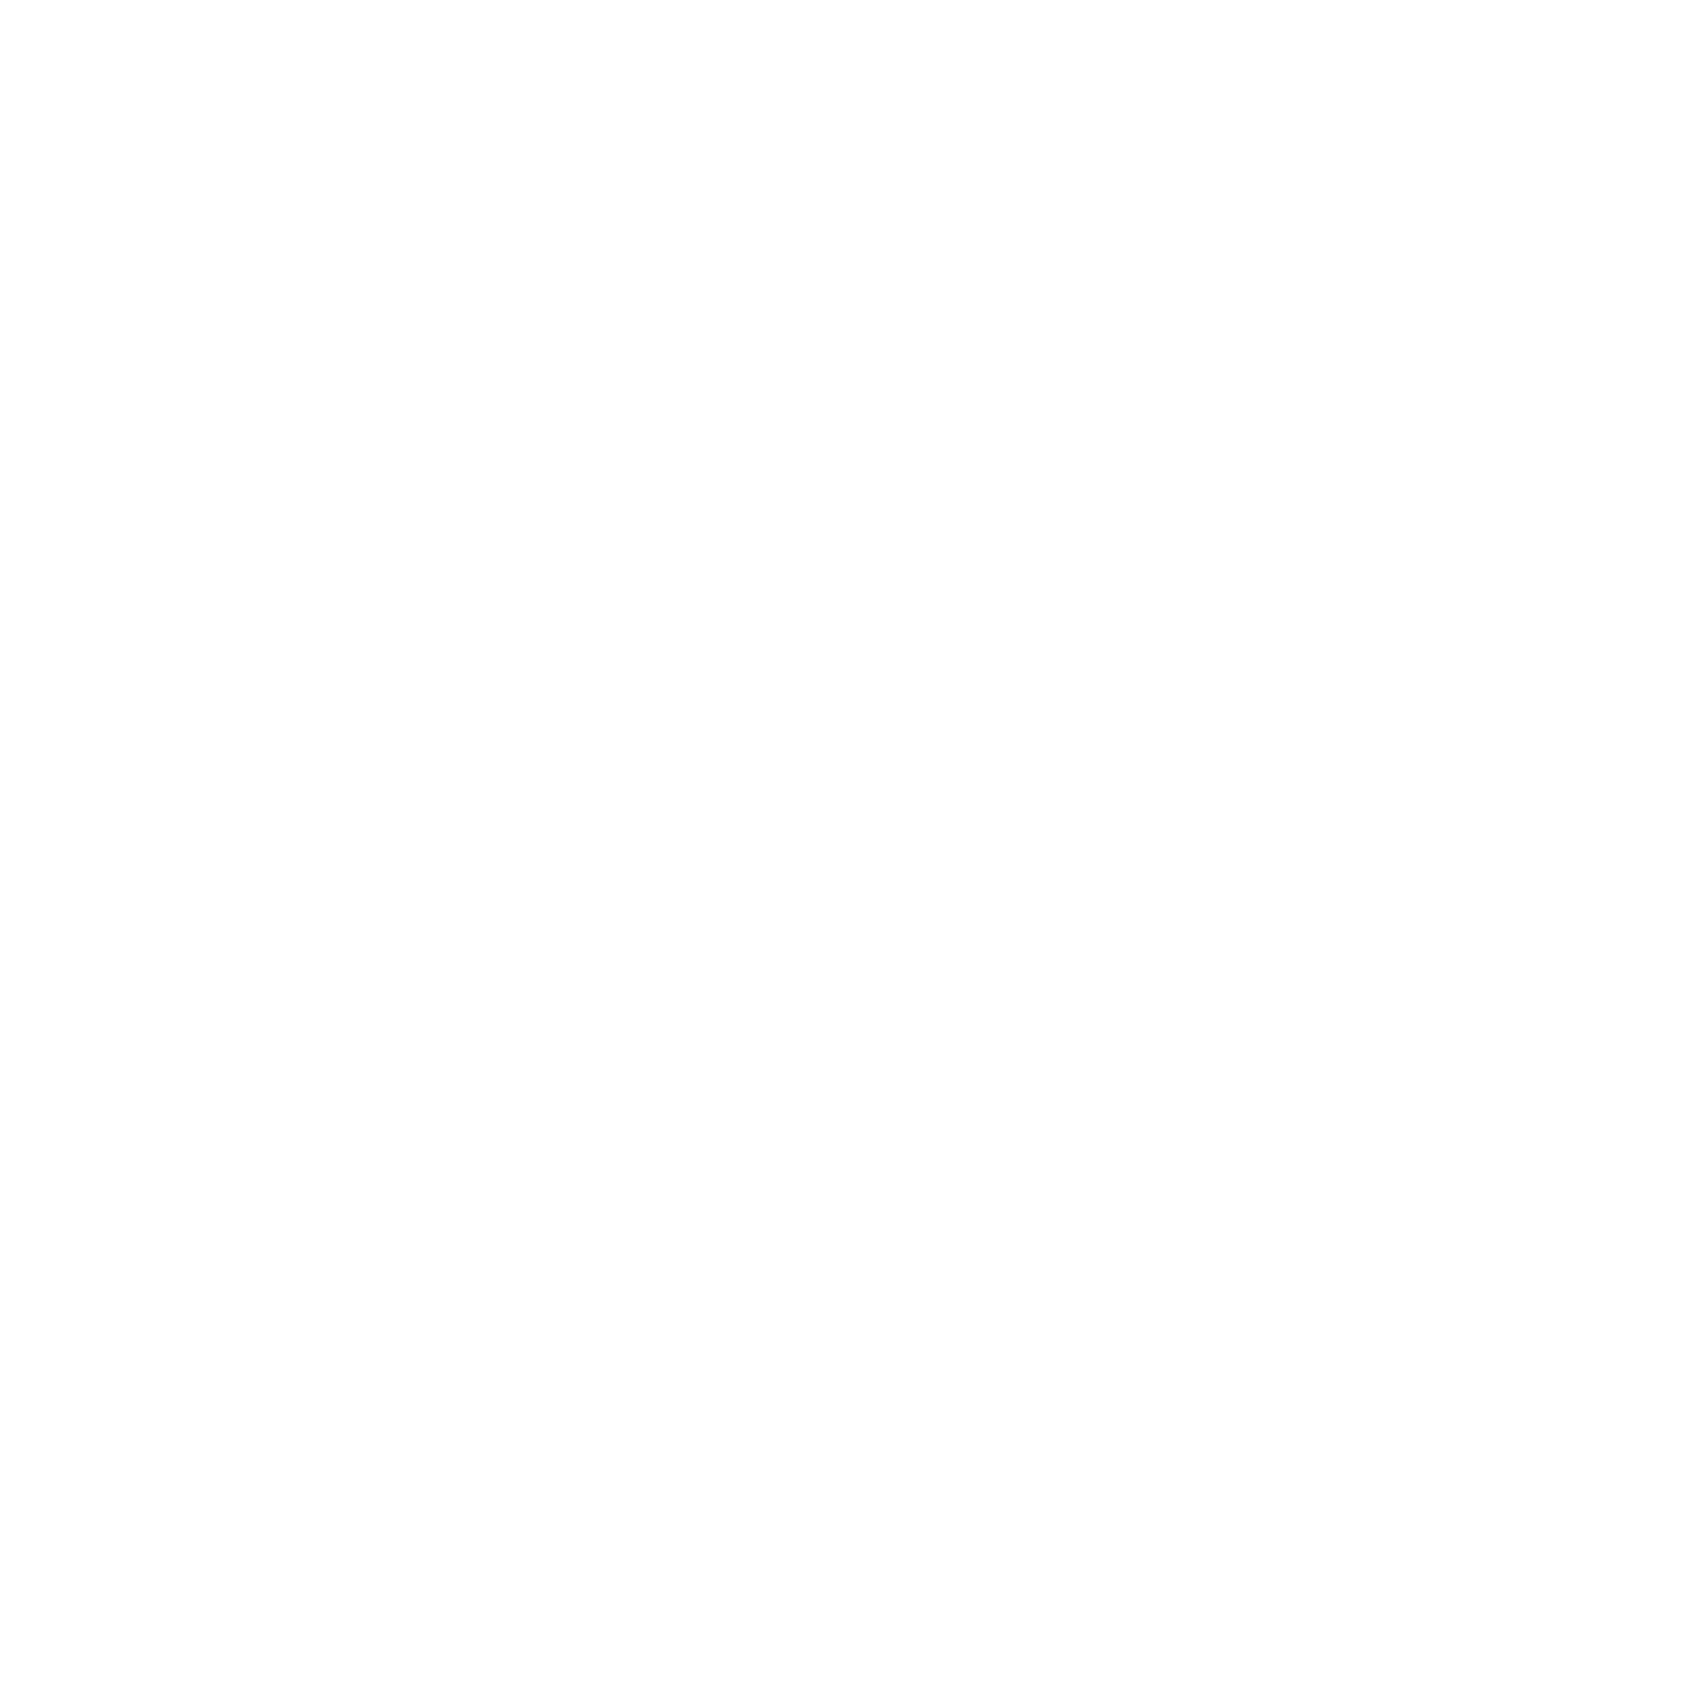 TEXT - Lupulus